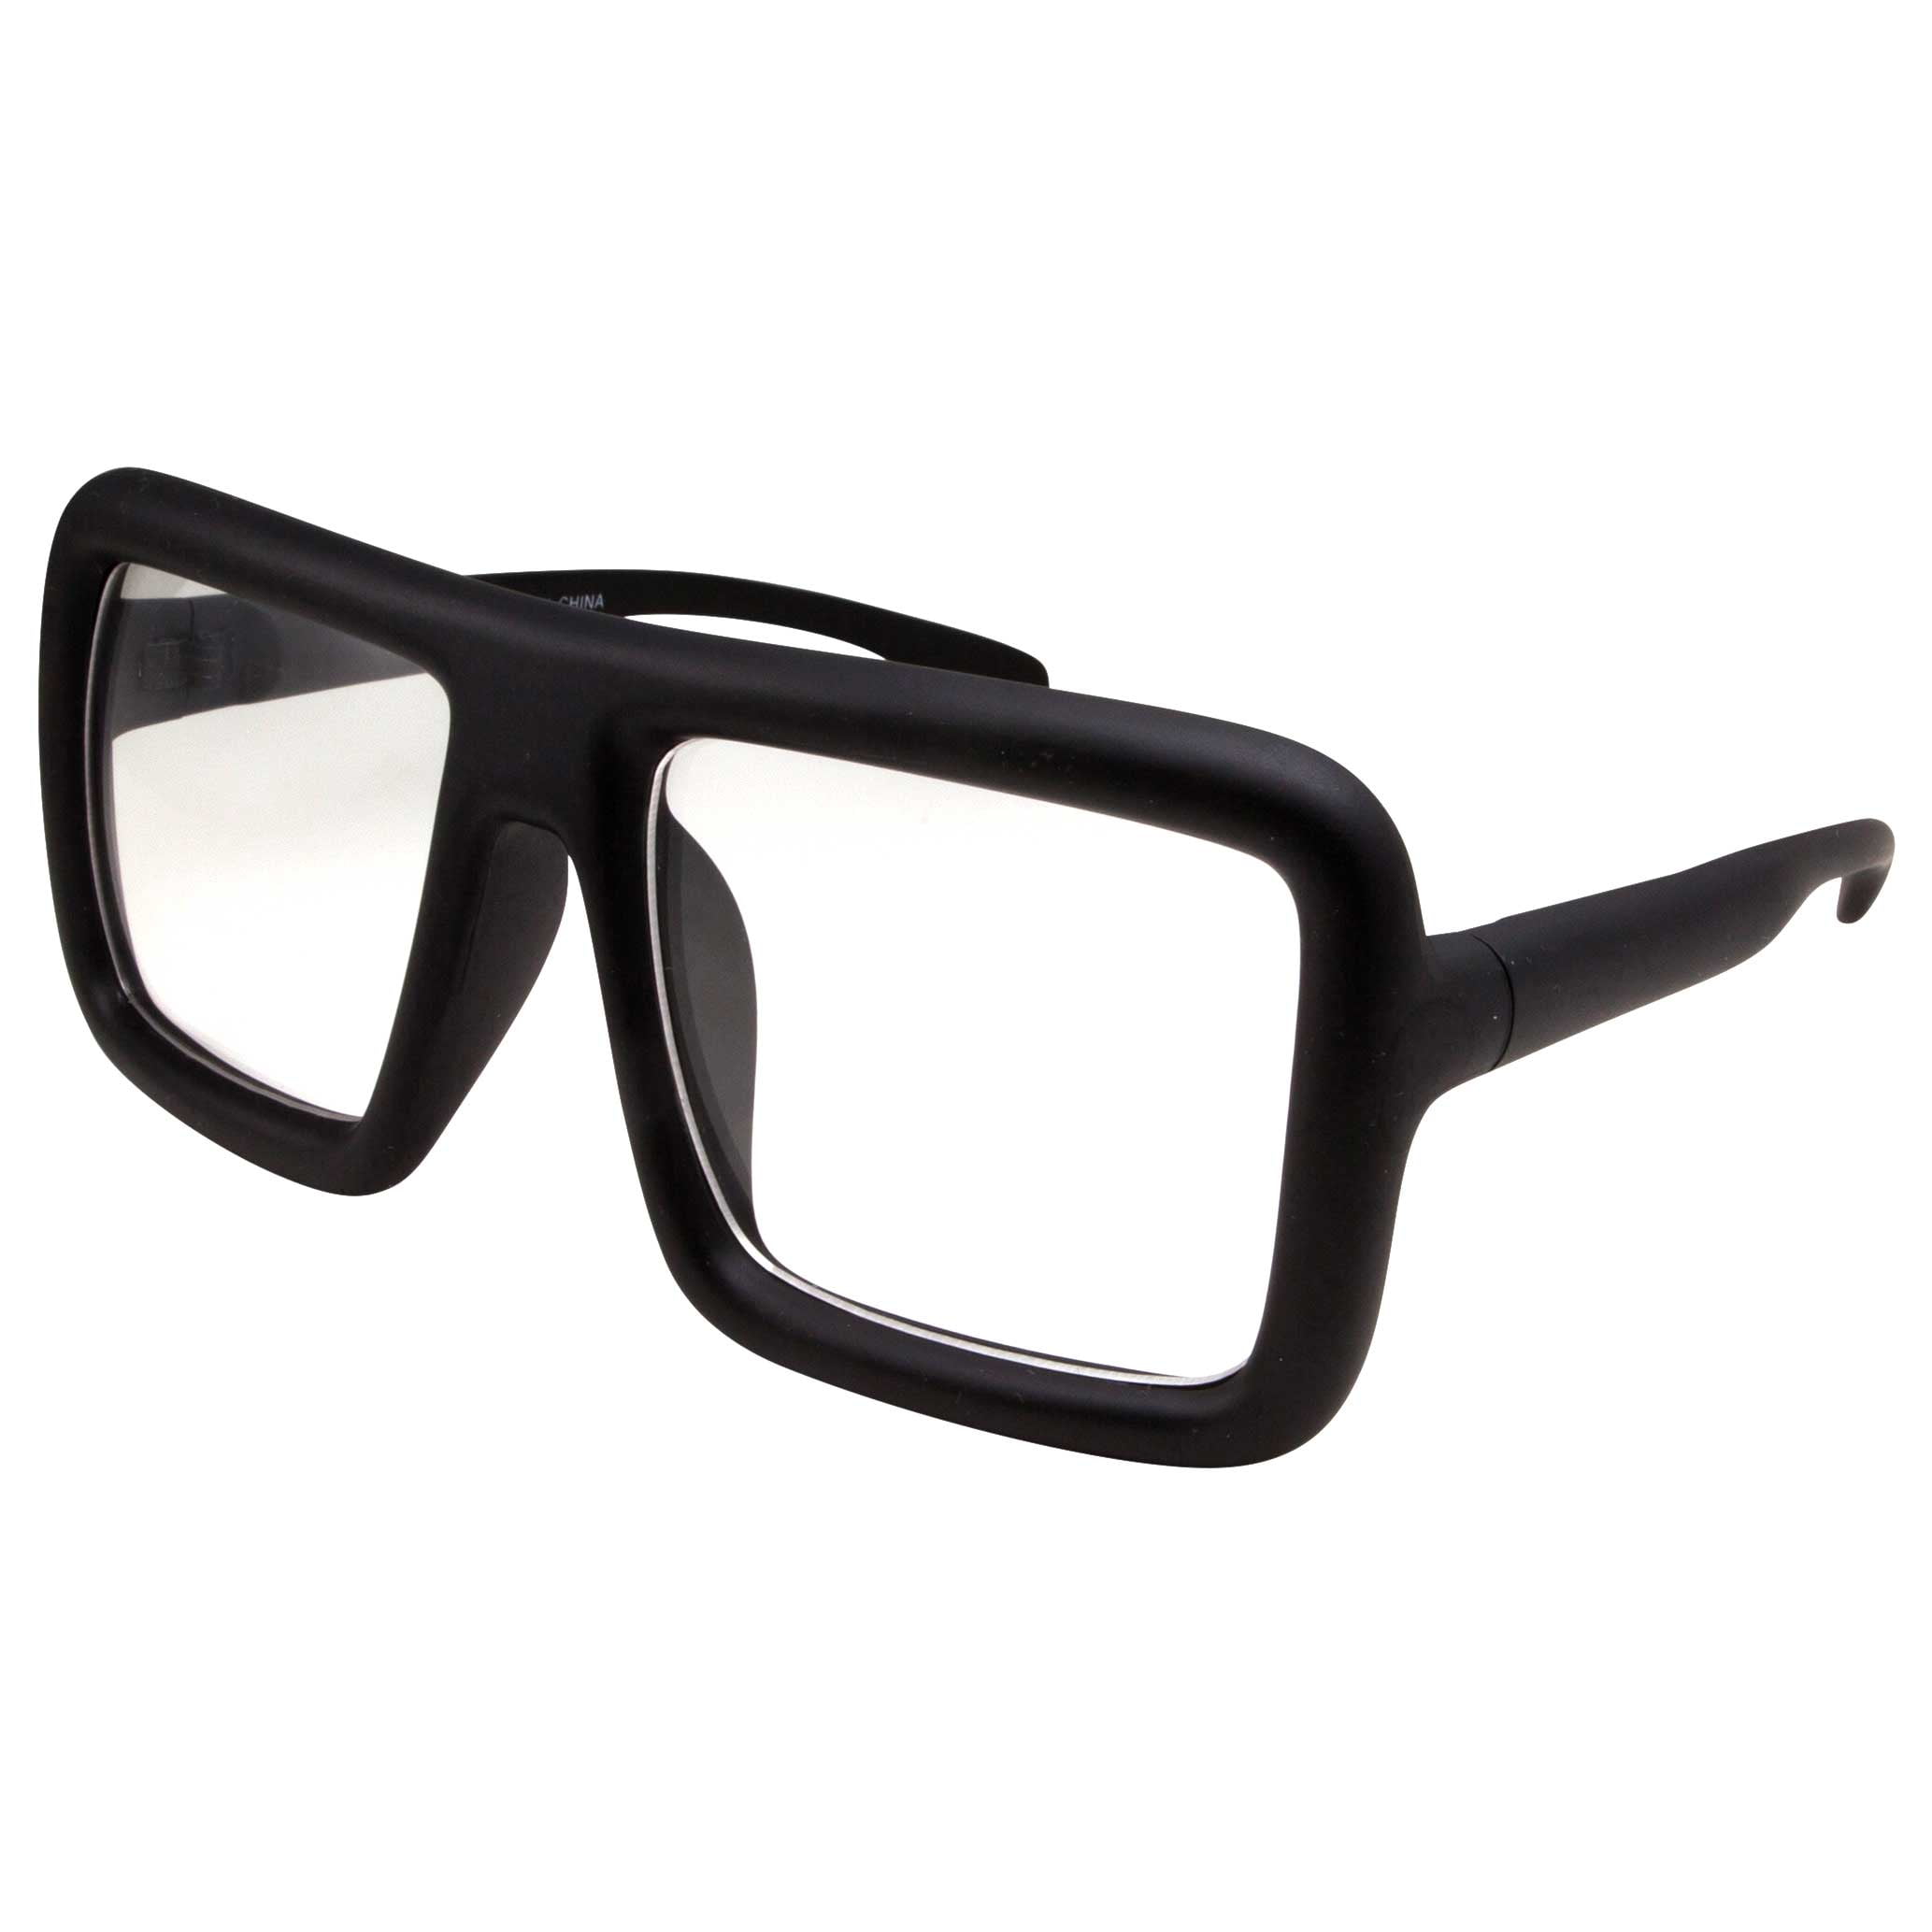 New Super Flat Lens Sunglasses Oversize Thick Square Frame Mirror Lens 